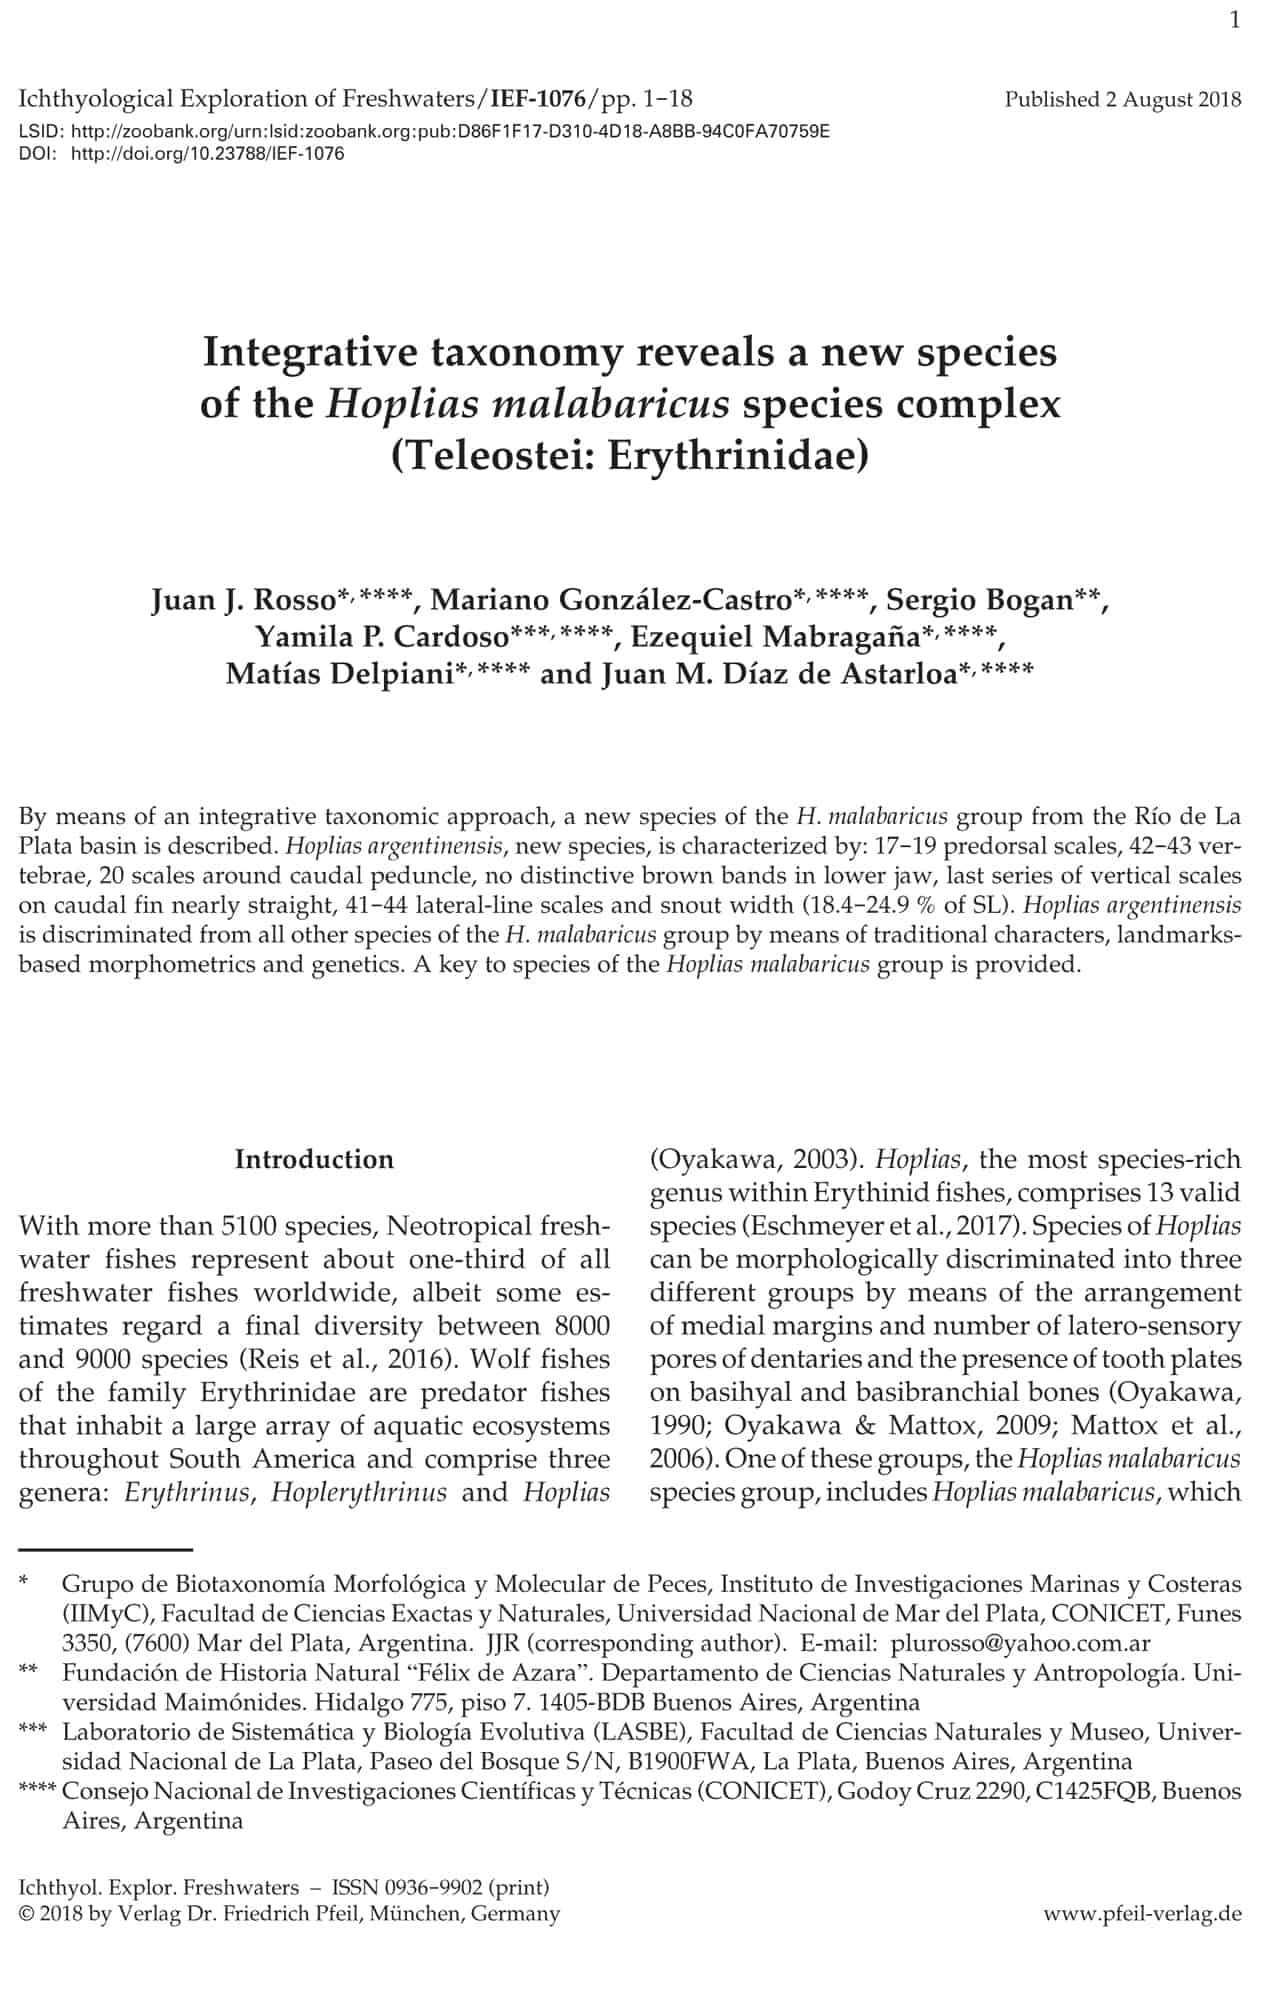 Integrative taxonomy reveals a new species of the Hoplias malabaricus species complex (Teleostei: Erythrinidae)